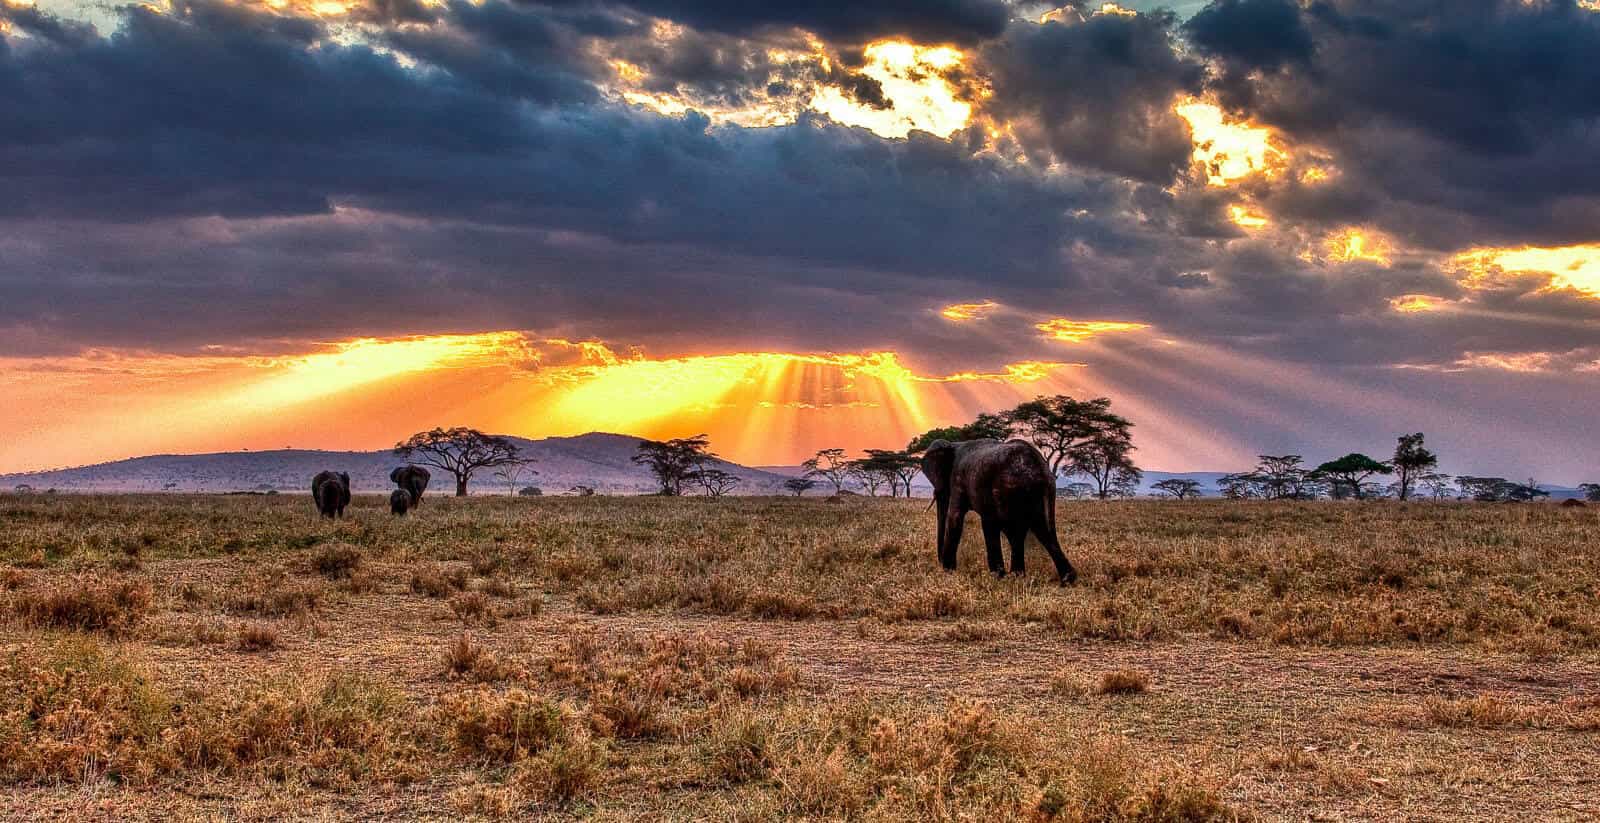 The Serengeti Plains National Park Safari Guide